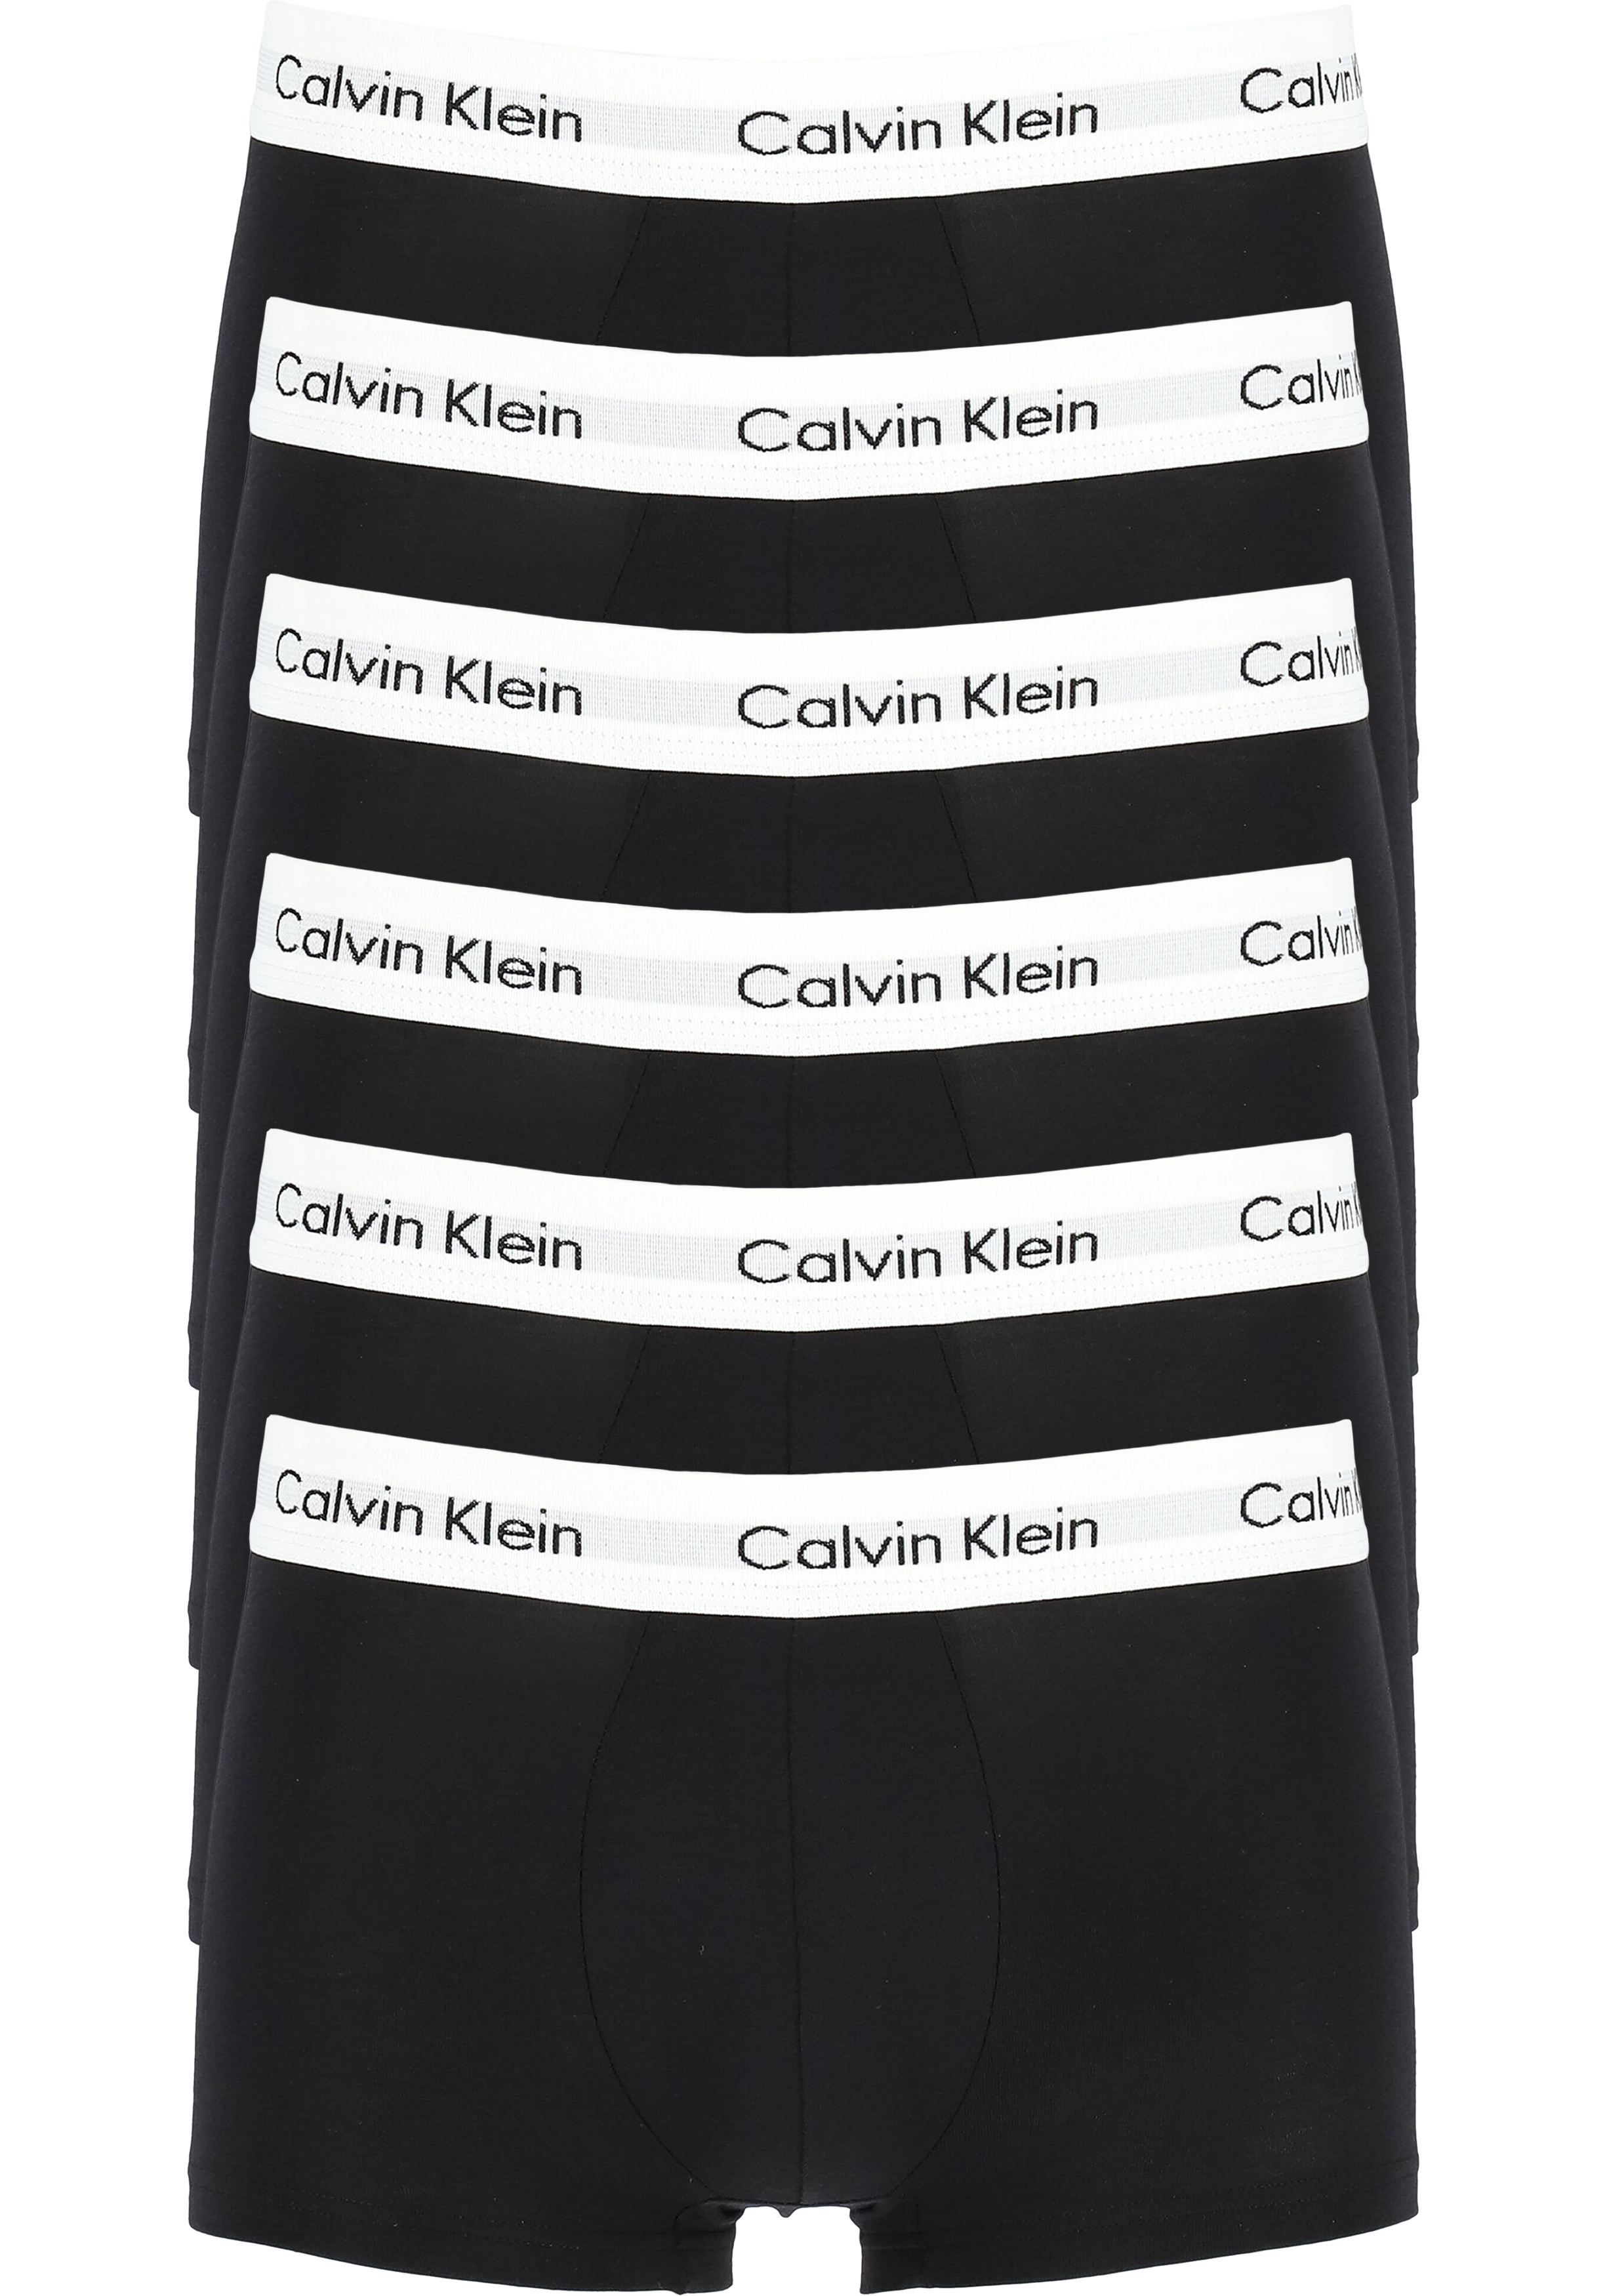 Actie Calvin Klein low rise trunks, lage boxers kort, zwart - Zomer SALE tot